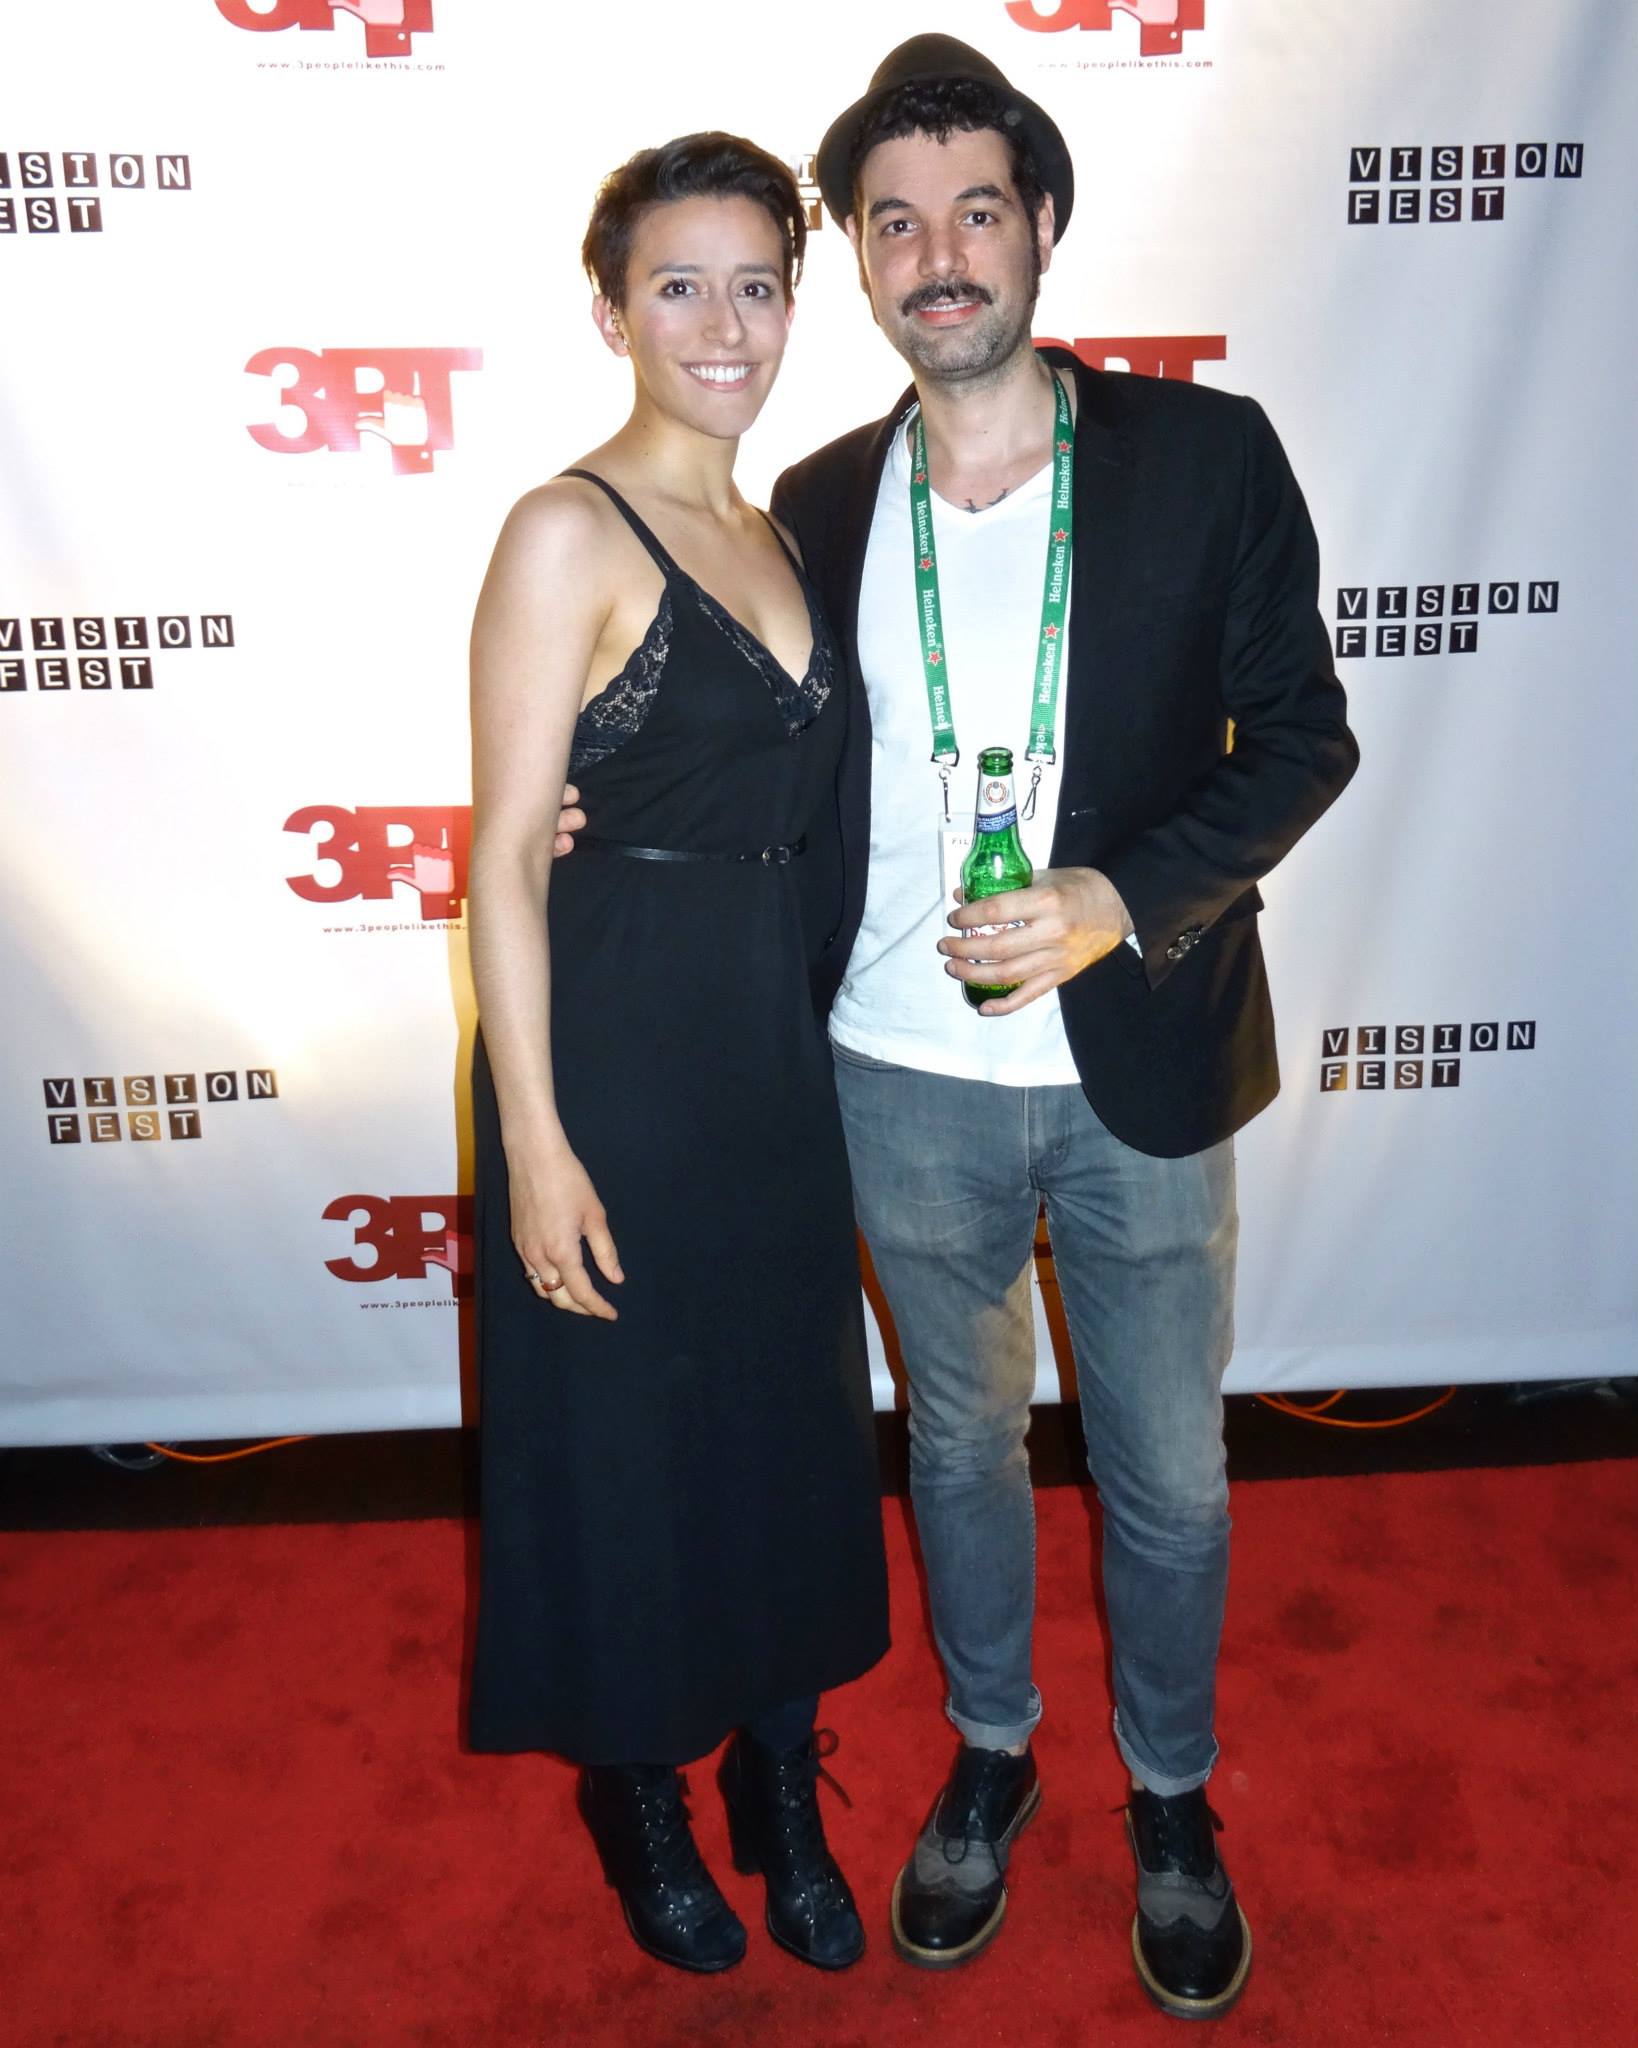 Broken Jam 2014 - Vision Fest 2015 @ Tribeca Cinemas, NYC (Left to Right) Ashley Carvalho, Emanuele Michetti